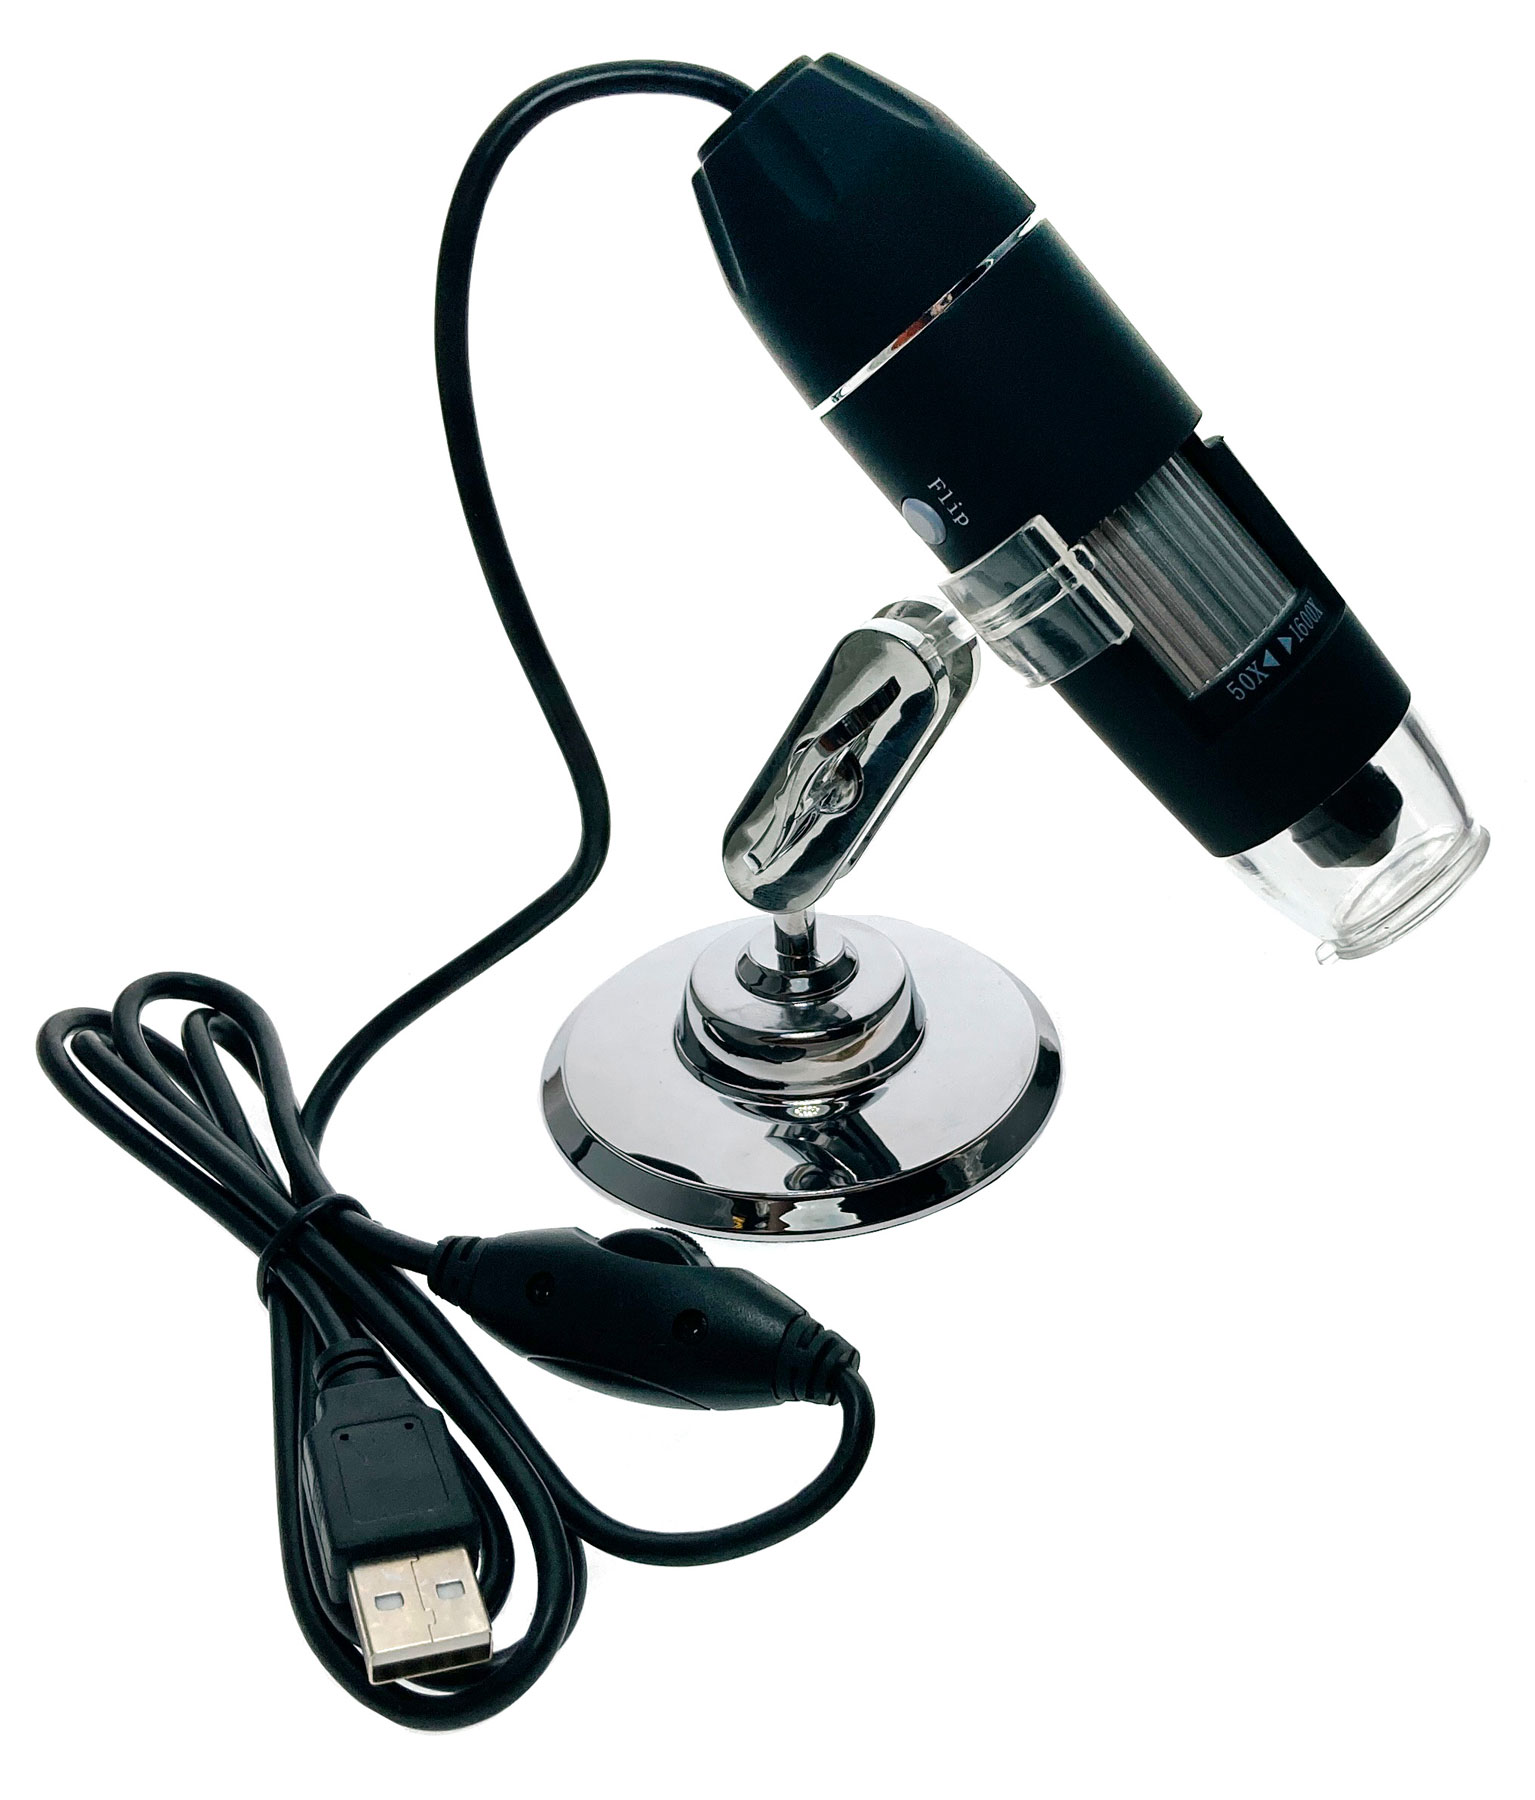 USB-микроскоп цифровой Espada E-UM21600x